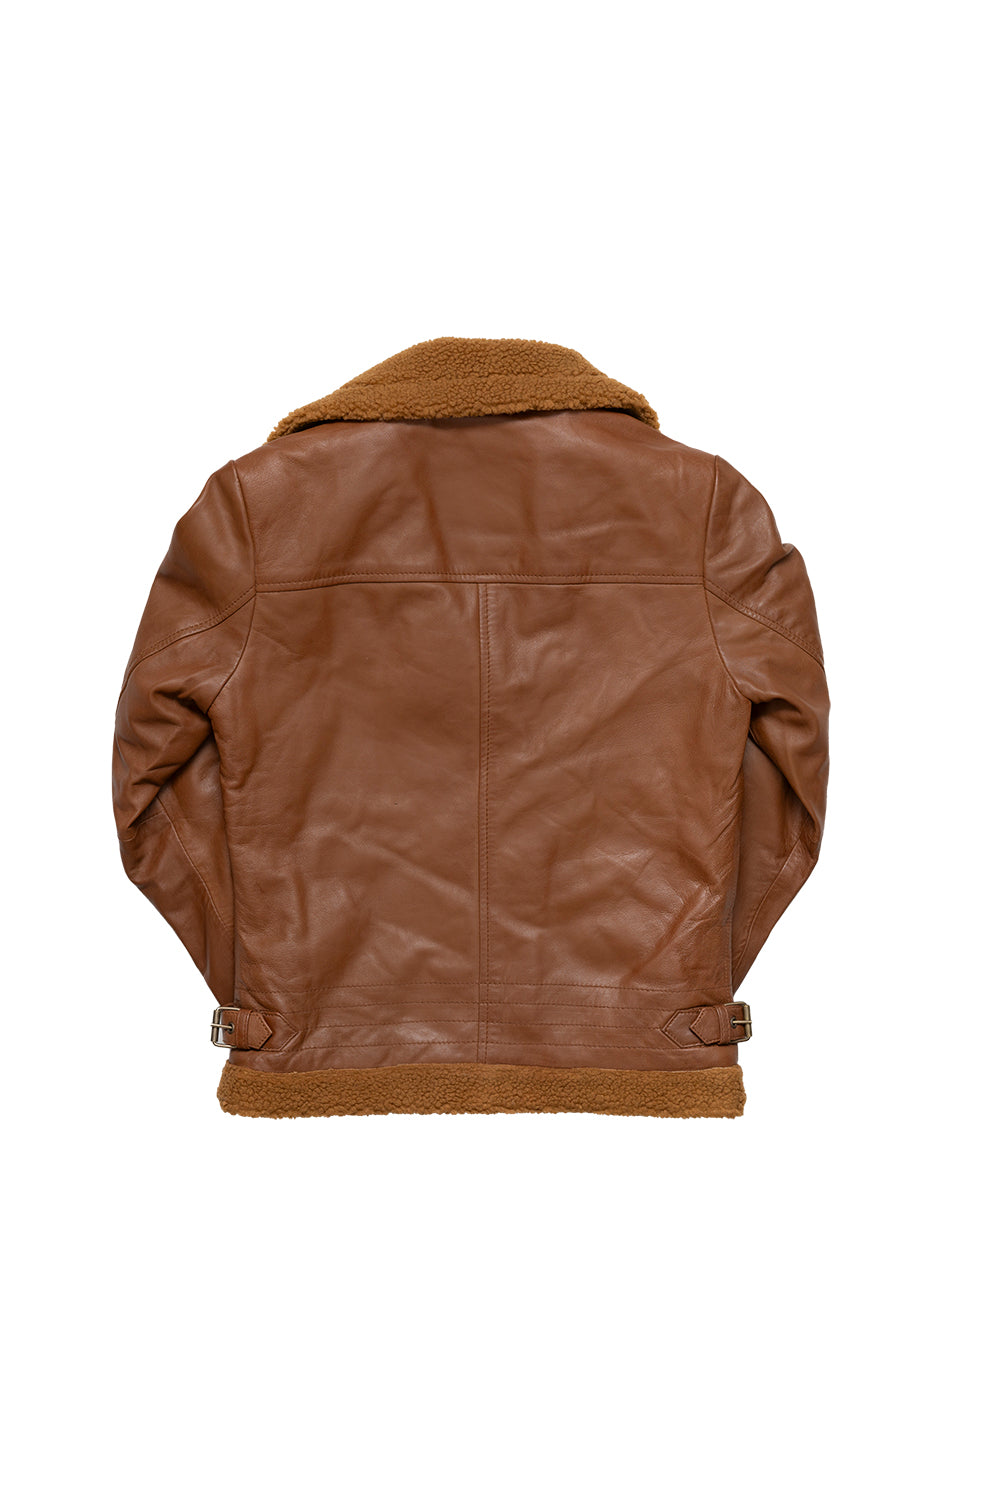 First Manufacturing Chelsea - Women's Leather Jacket, Dark Cognac